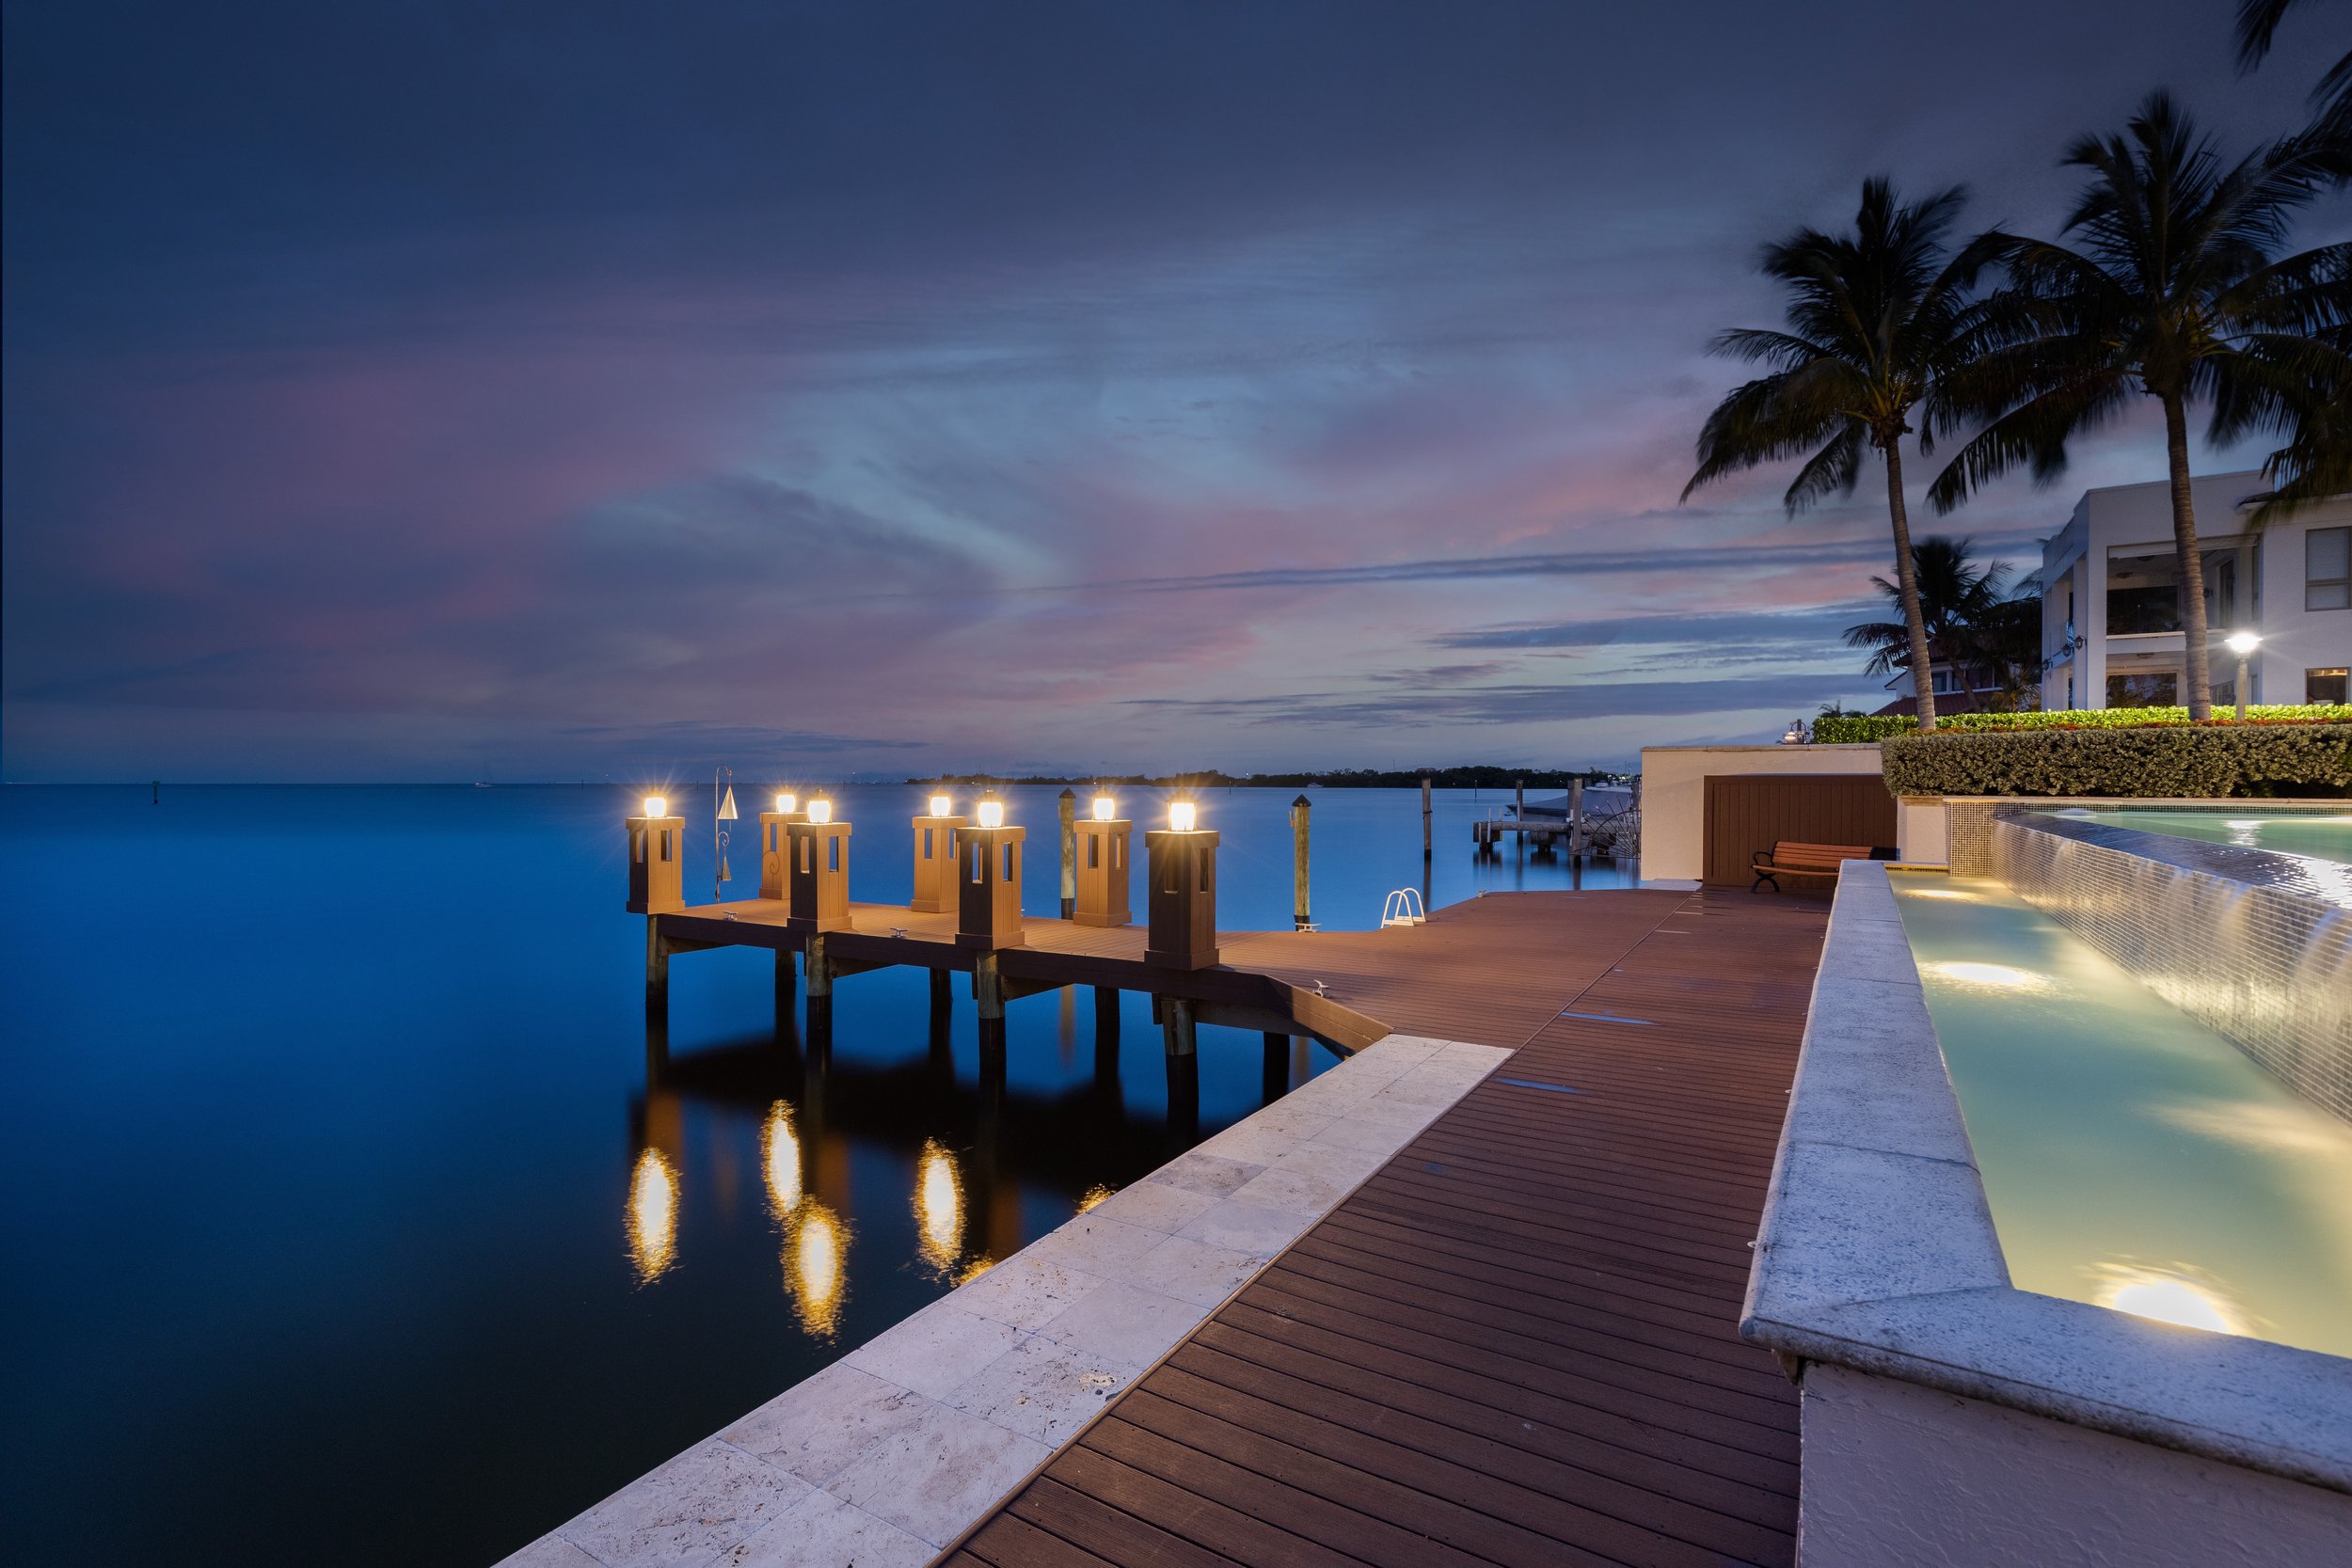 Master Brokers Forum Listing: Step Inside This $25 Million Coconut Grove Waterfront Mediterranean Estate8.jpg